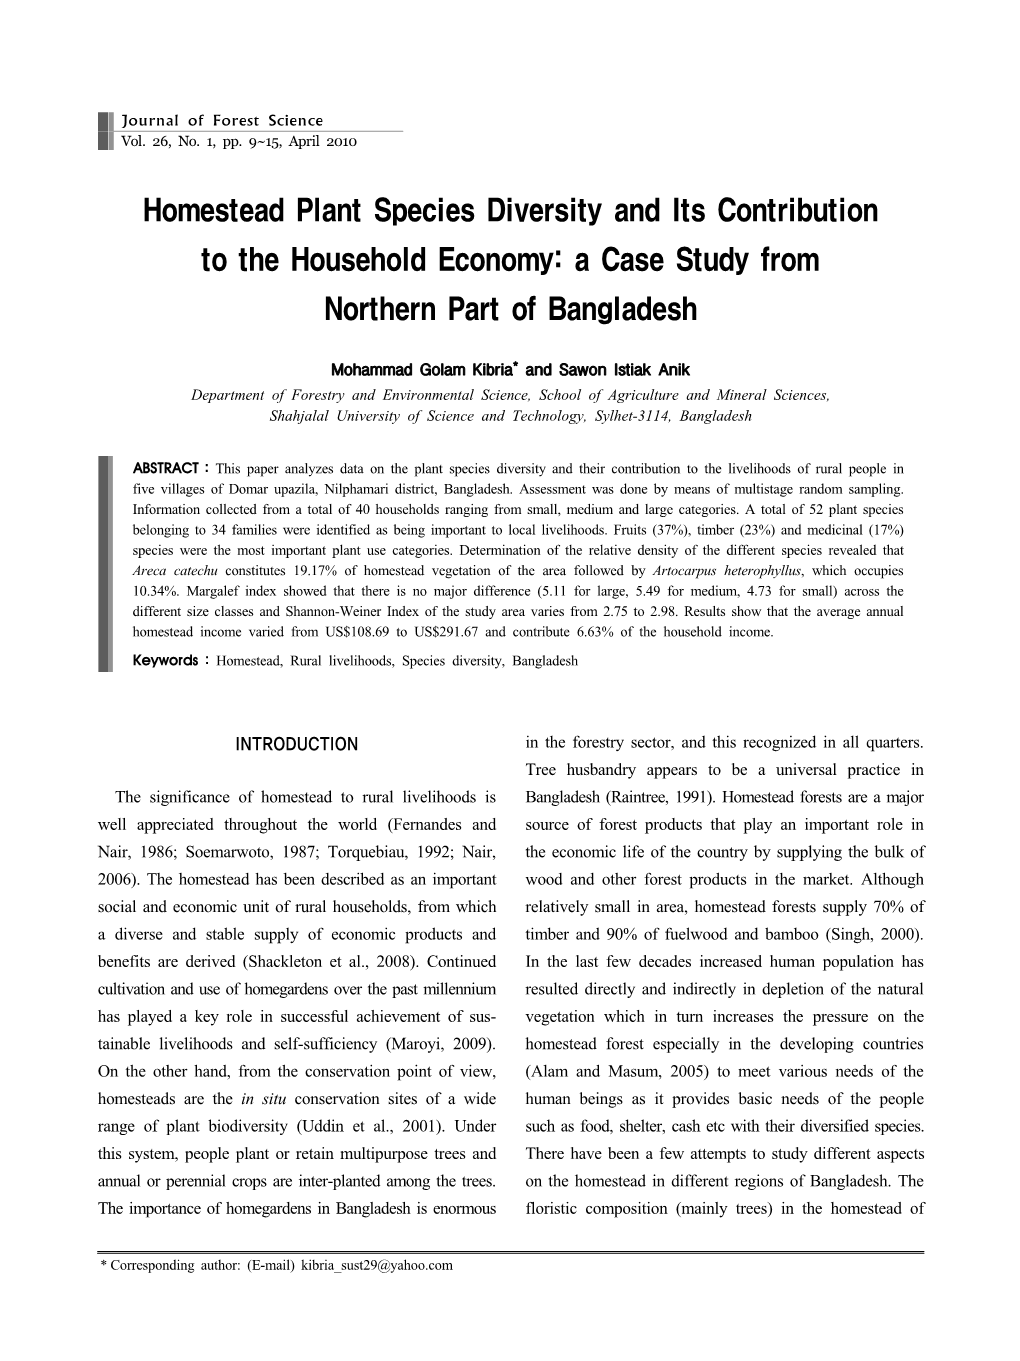 02.Homestead Plant Species Diversity and Ok.Hwp